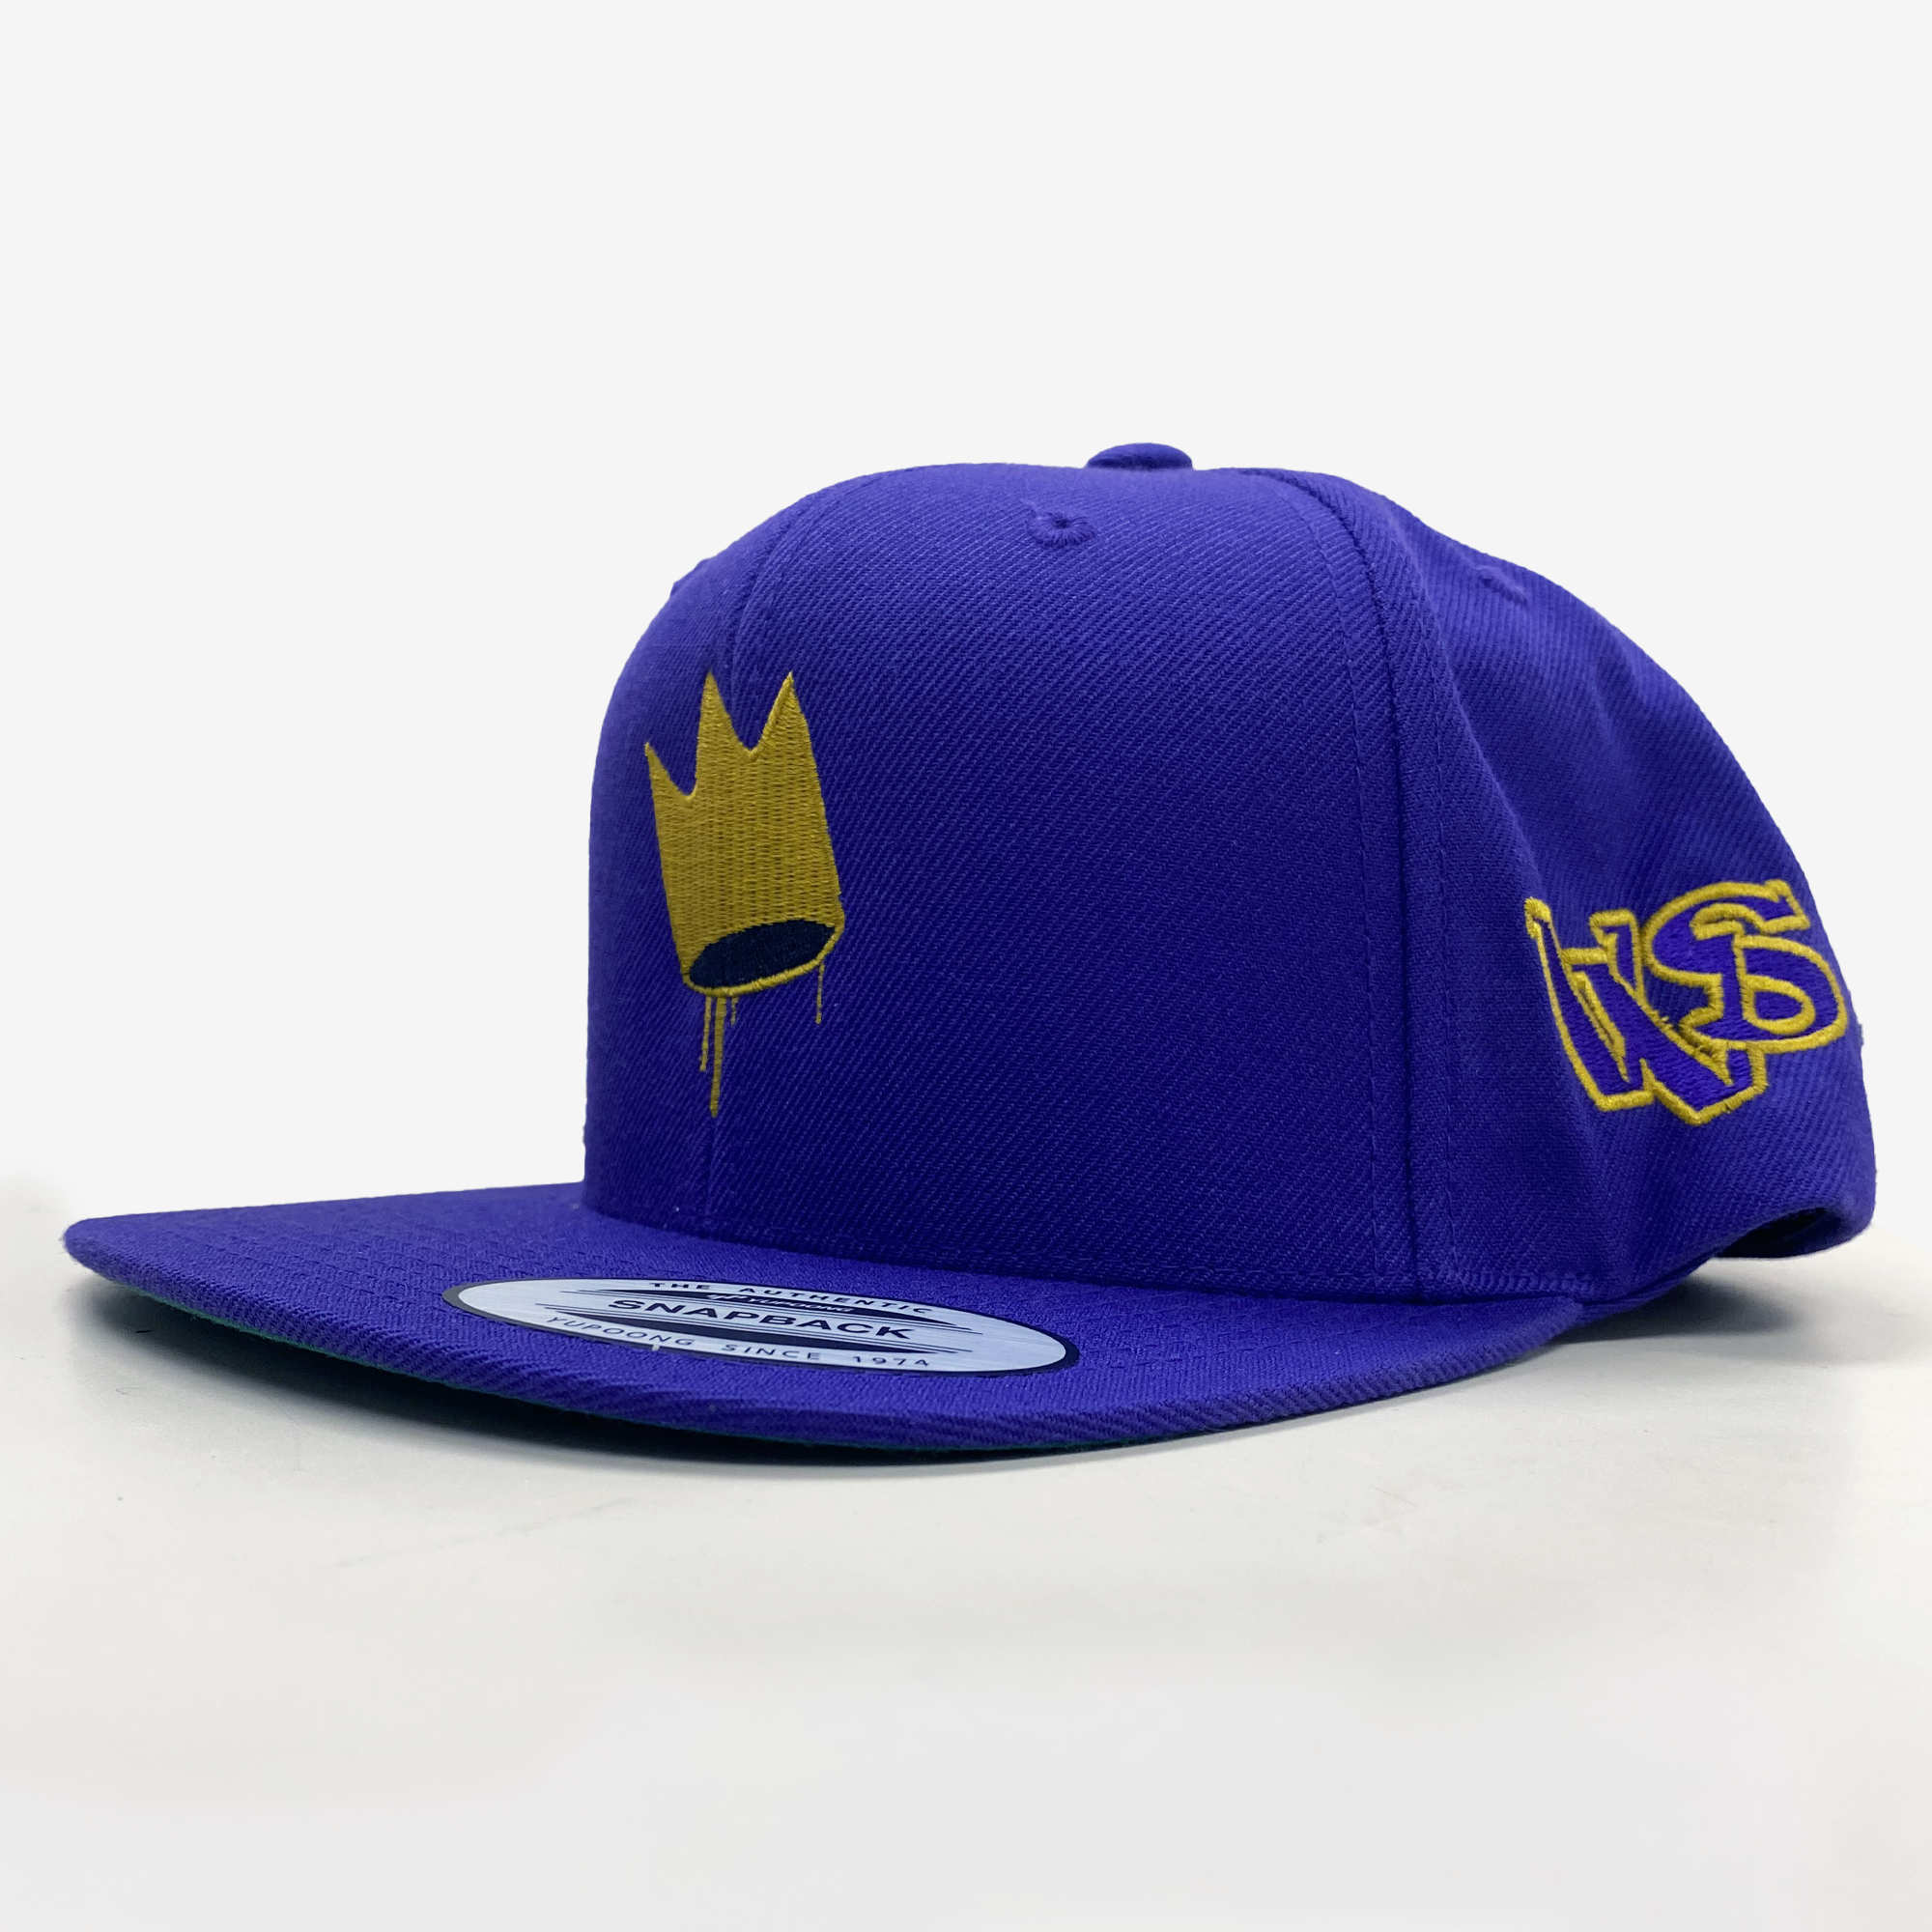 "Crown" VVS Embroidered Purple Snapback